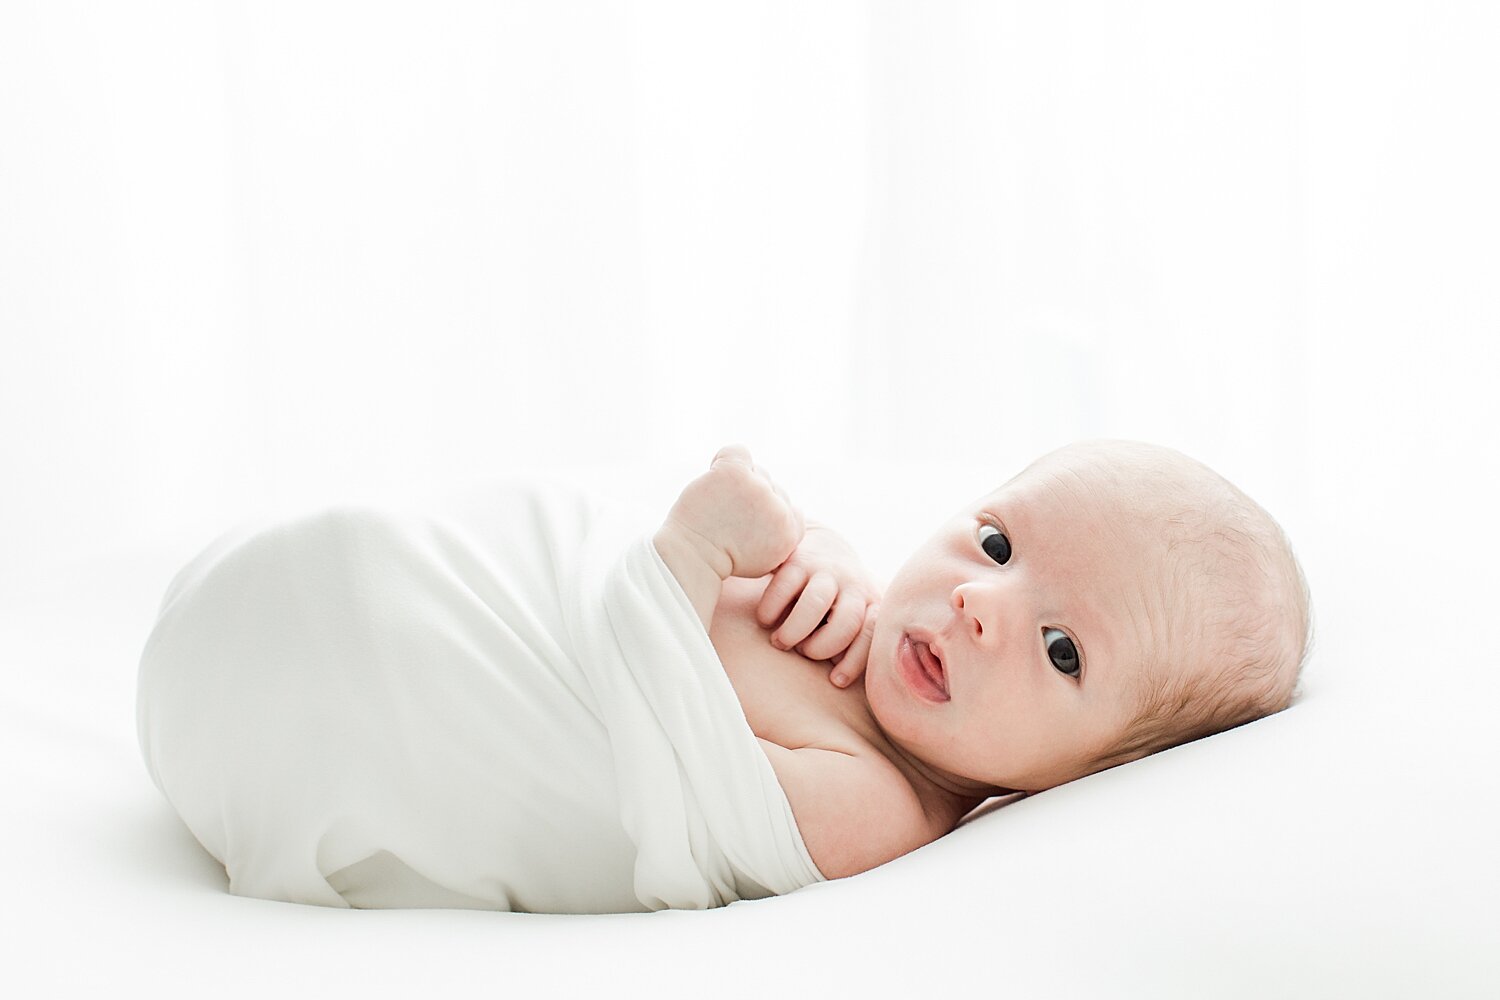 Classic newborn photo in Darien, CT studio. Photo by Kristin Wood Photography.